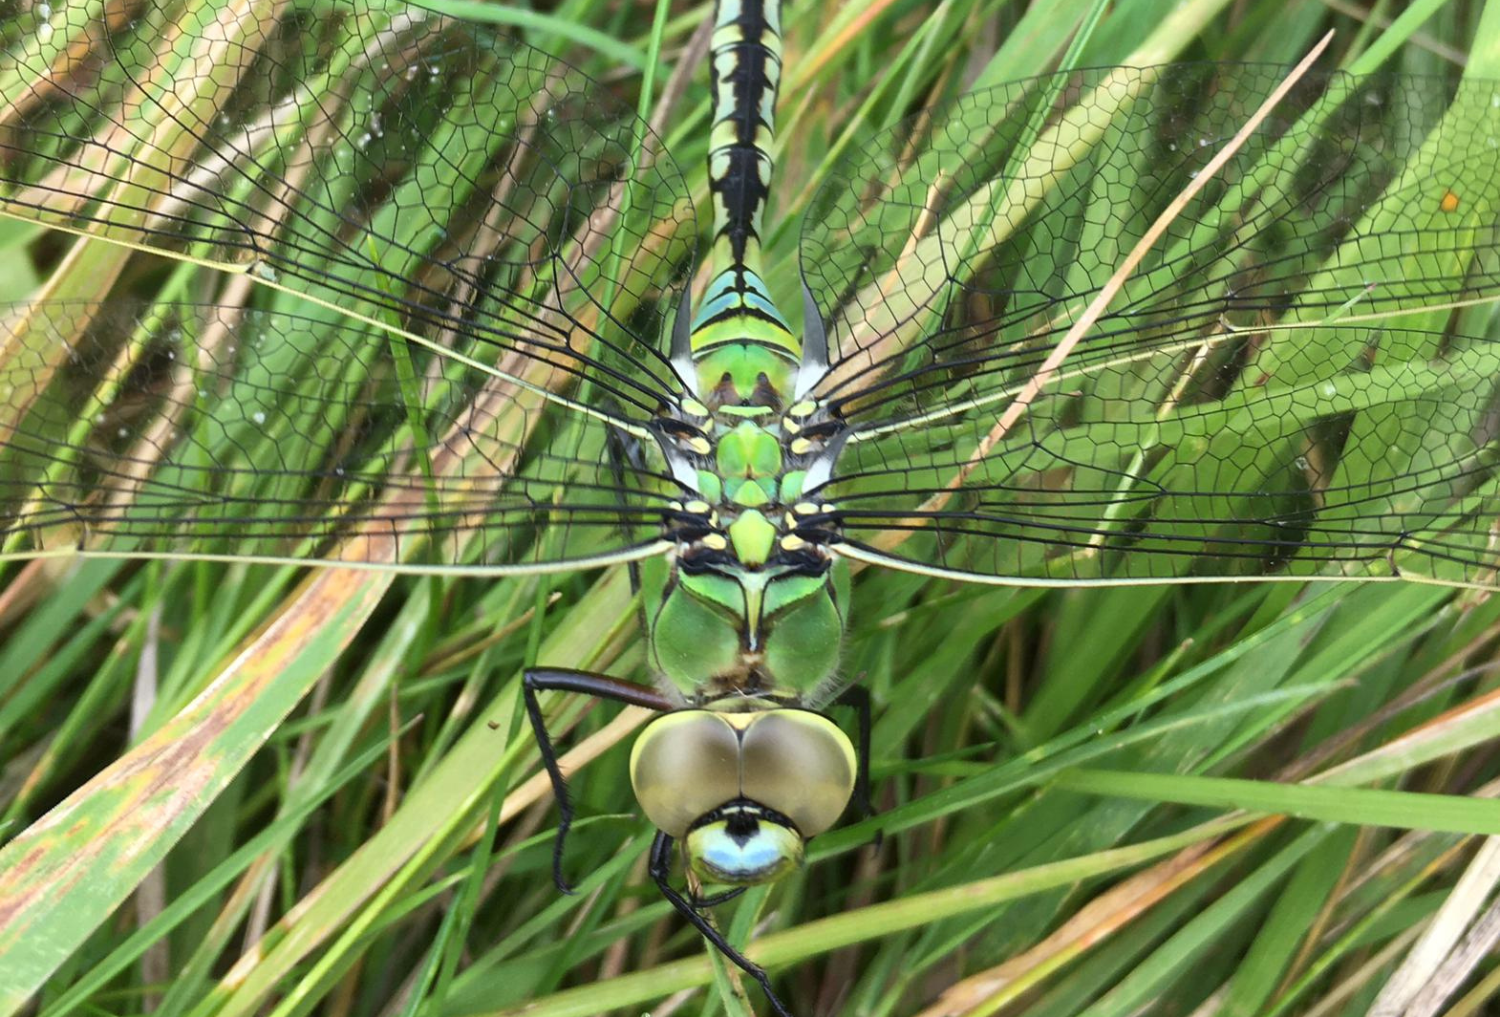 A close up of an emerald dragonfly amongst grass.